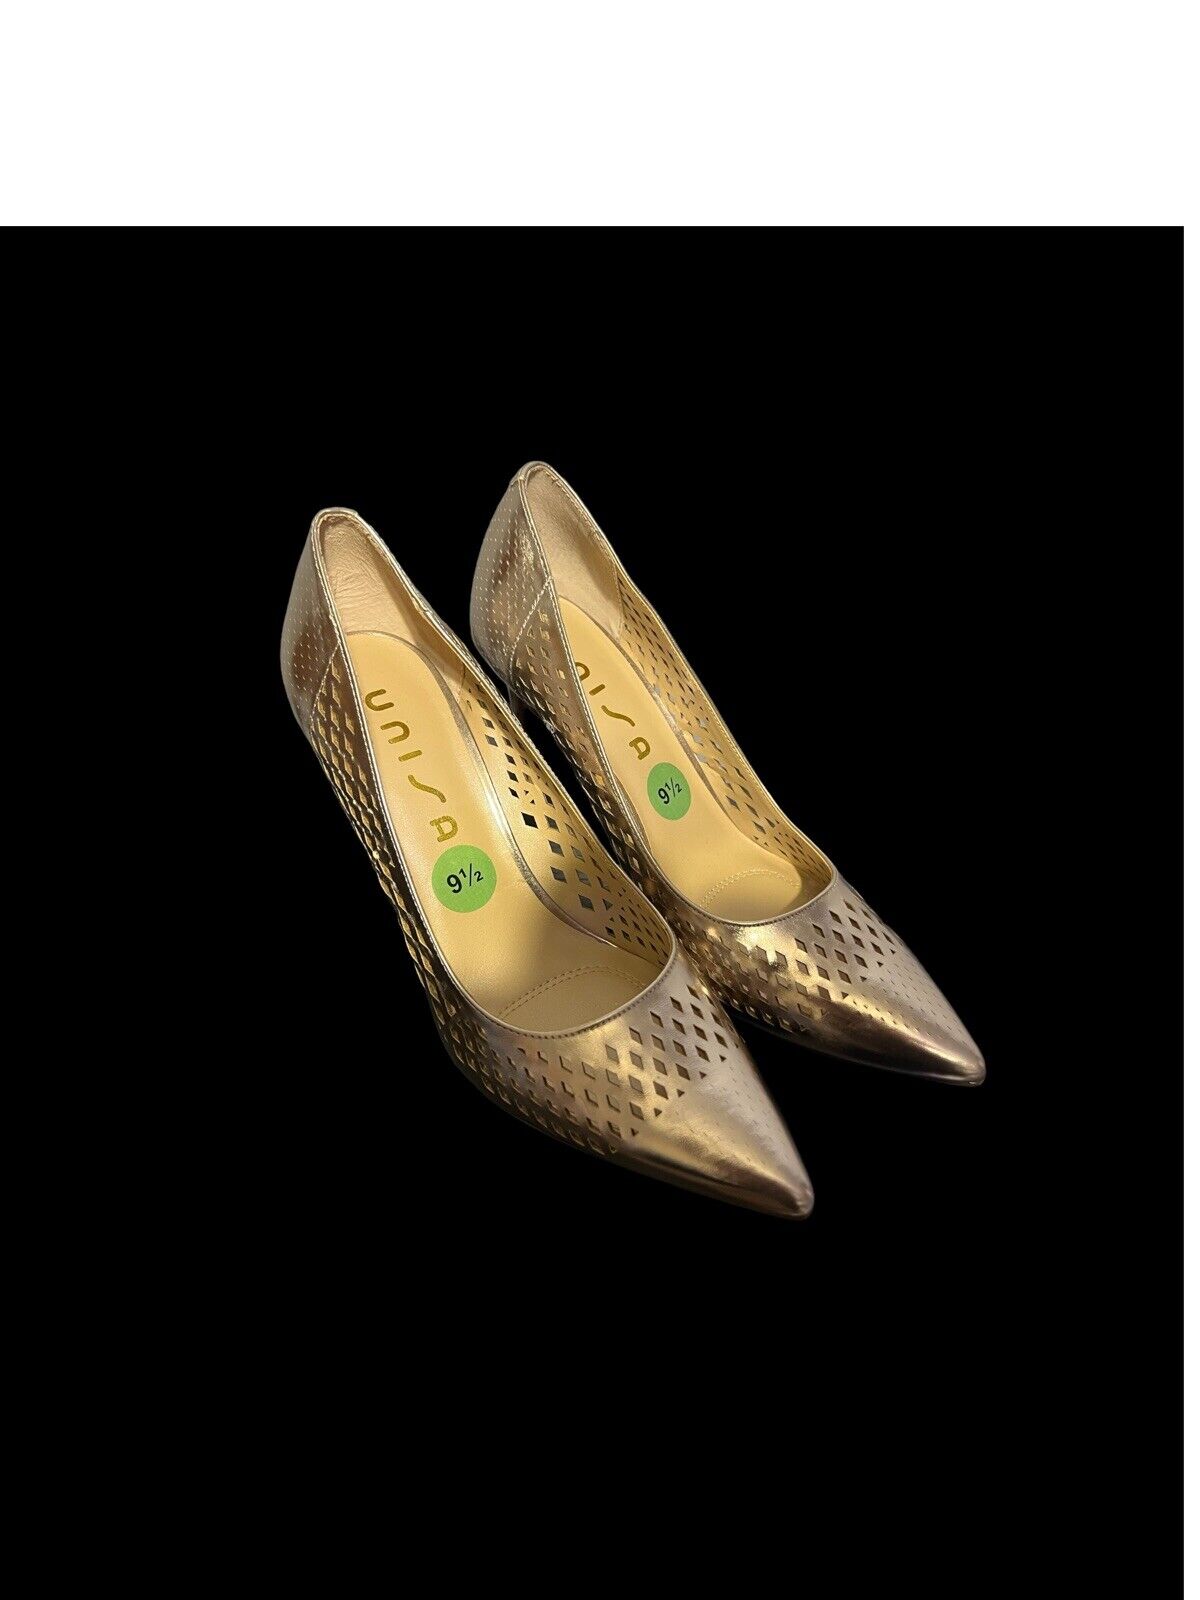 High Heel Rose Gold women shoes size 9 1/2 - image 2